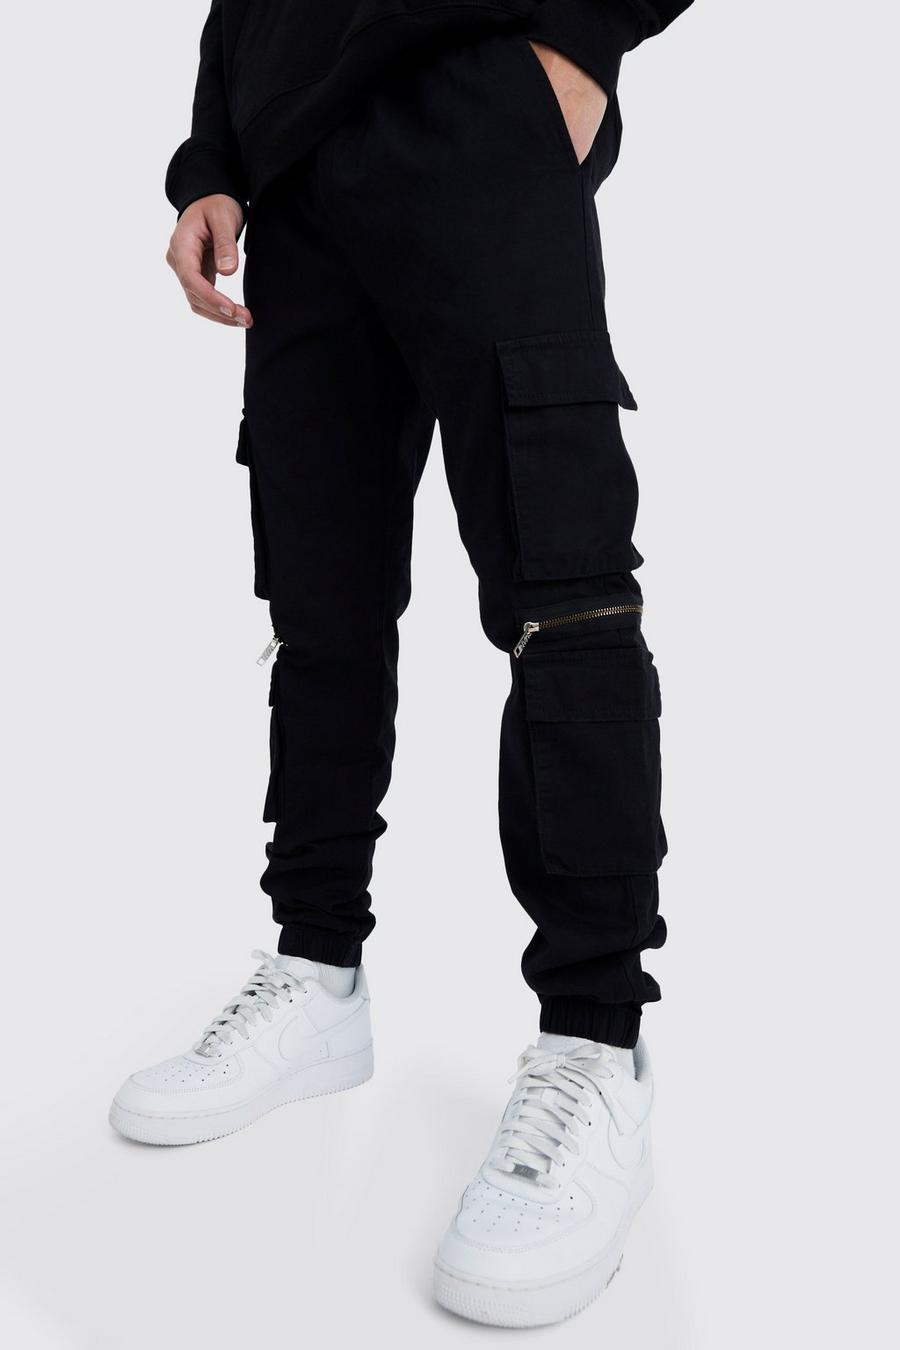 boohooMAN Mens Elastic Waist Multi Pocket Zip Cargo Pants - Black